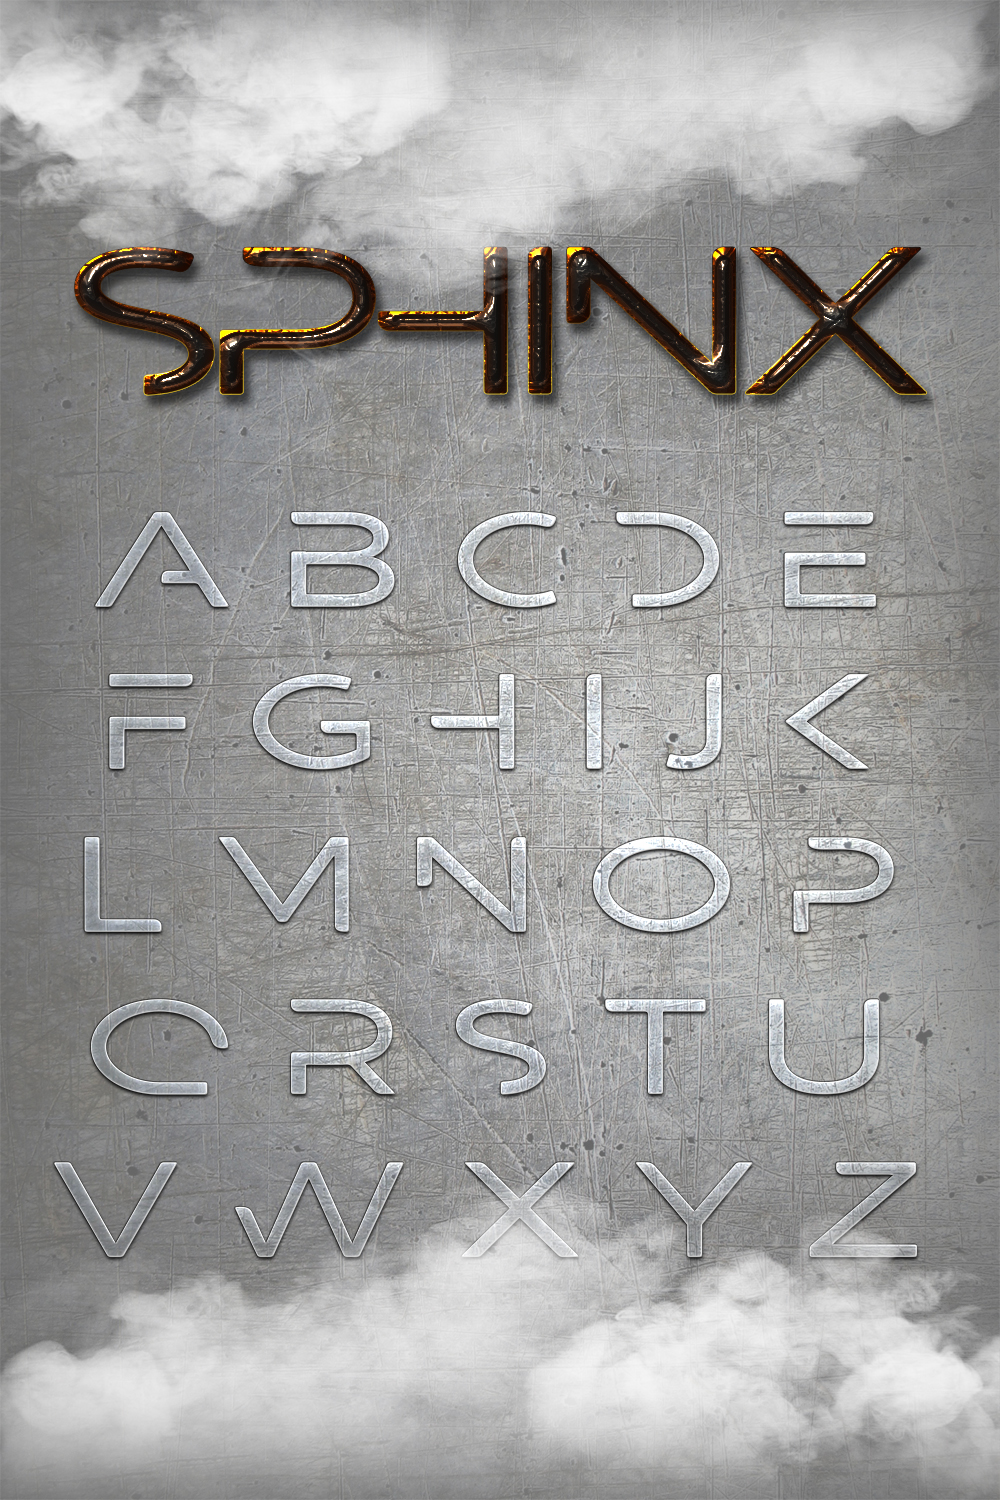 Sphinx font of pinterest.